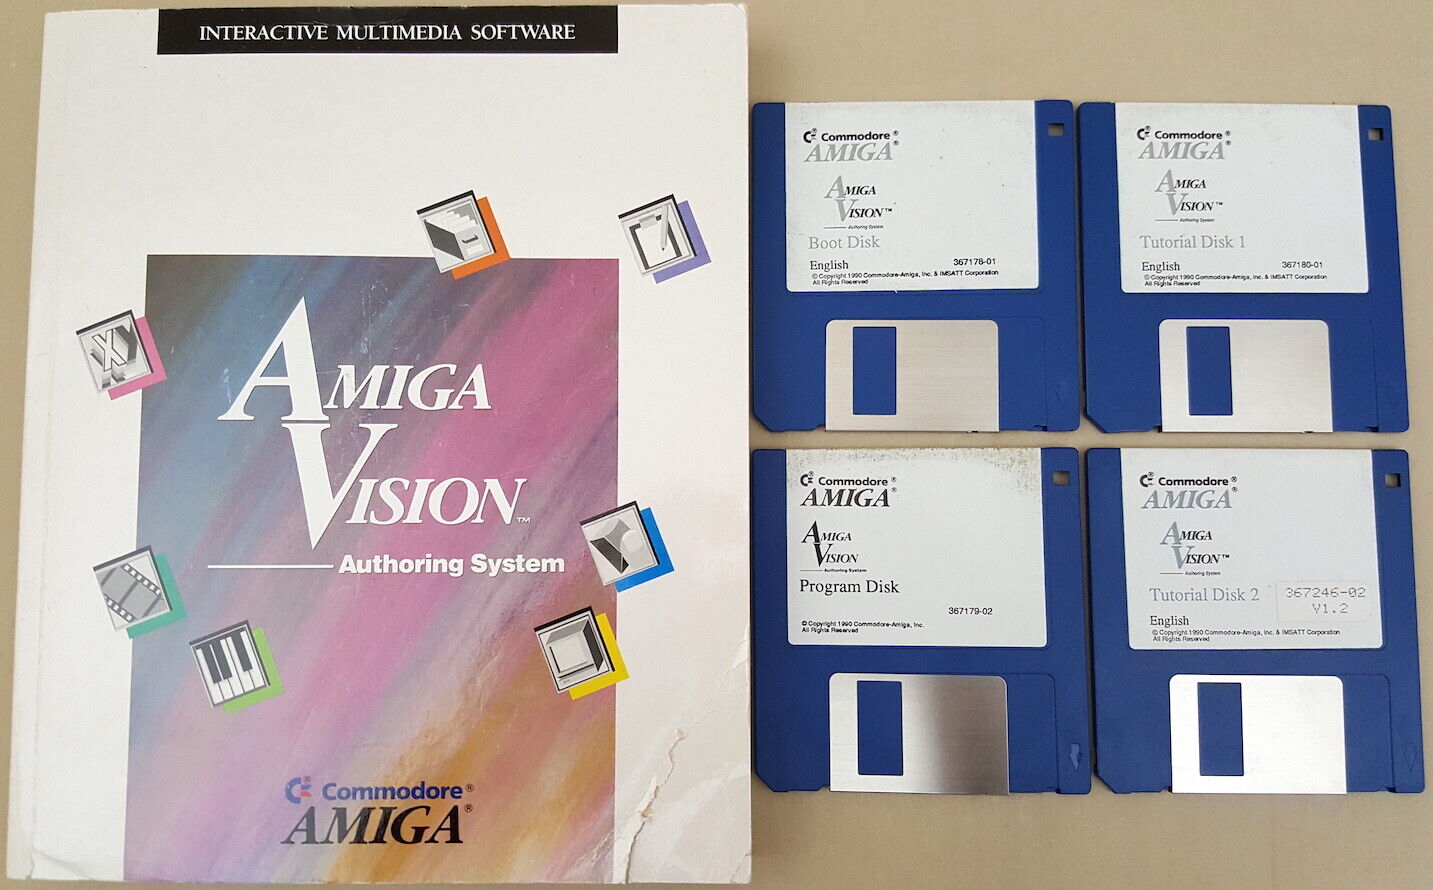 Amiga Vision v1.53revG ©1990 Commodore Amiga, Inc. Authoring System AmigaVision